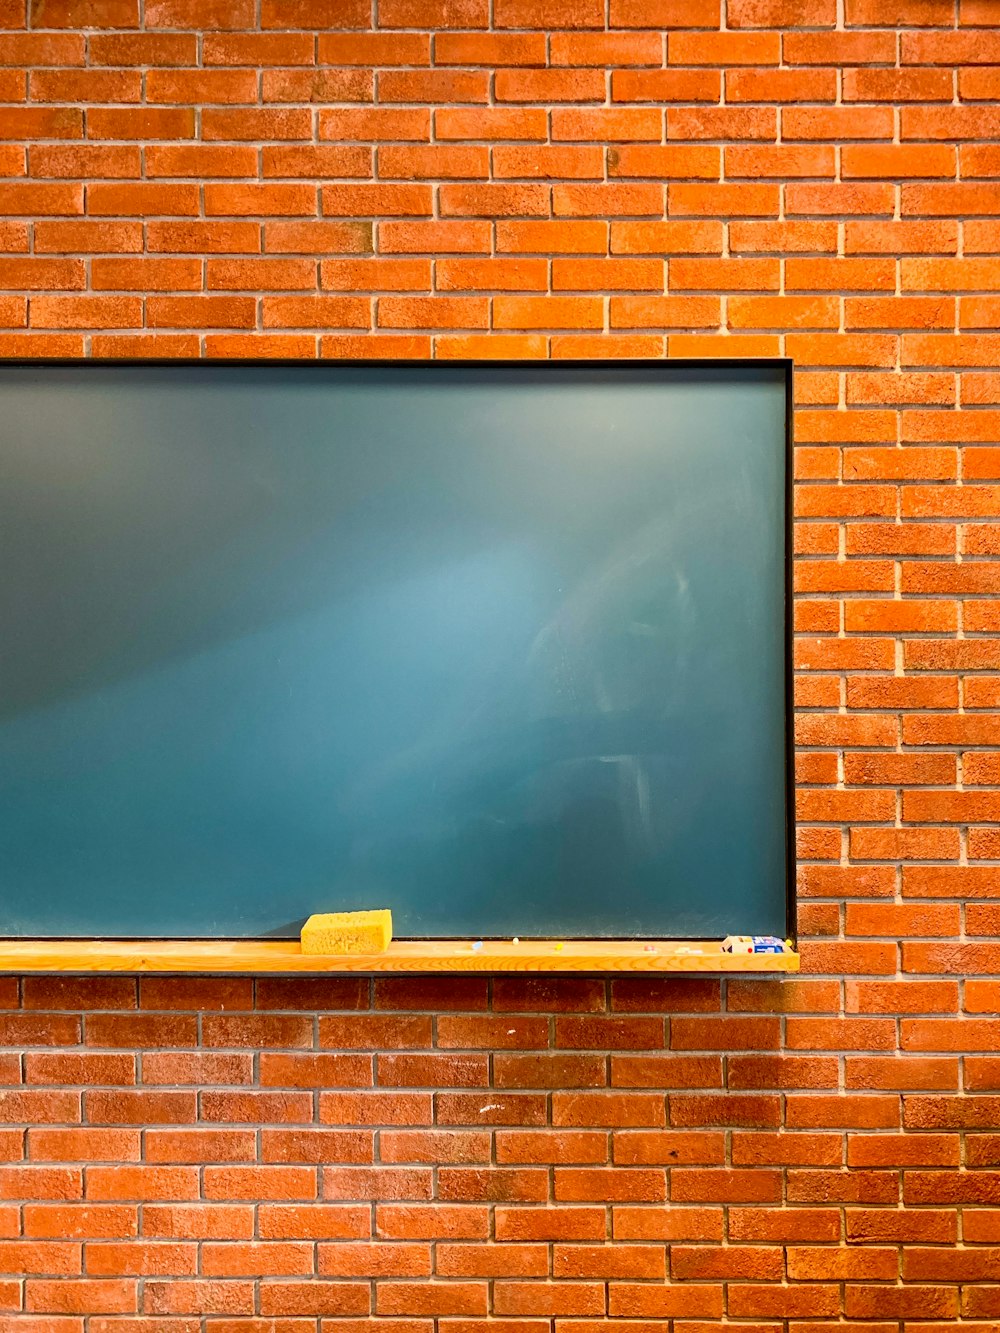 a blackboard mounted to a brick wall